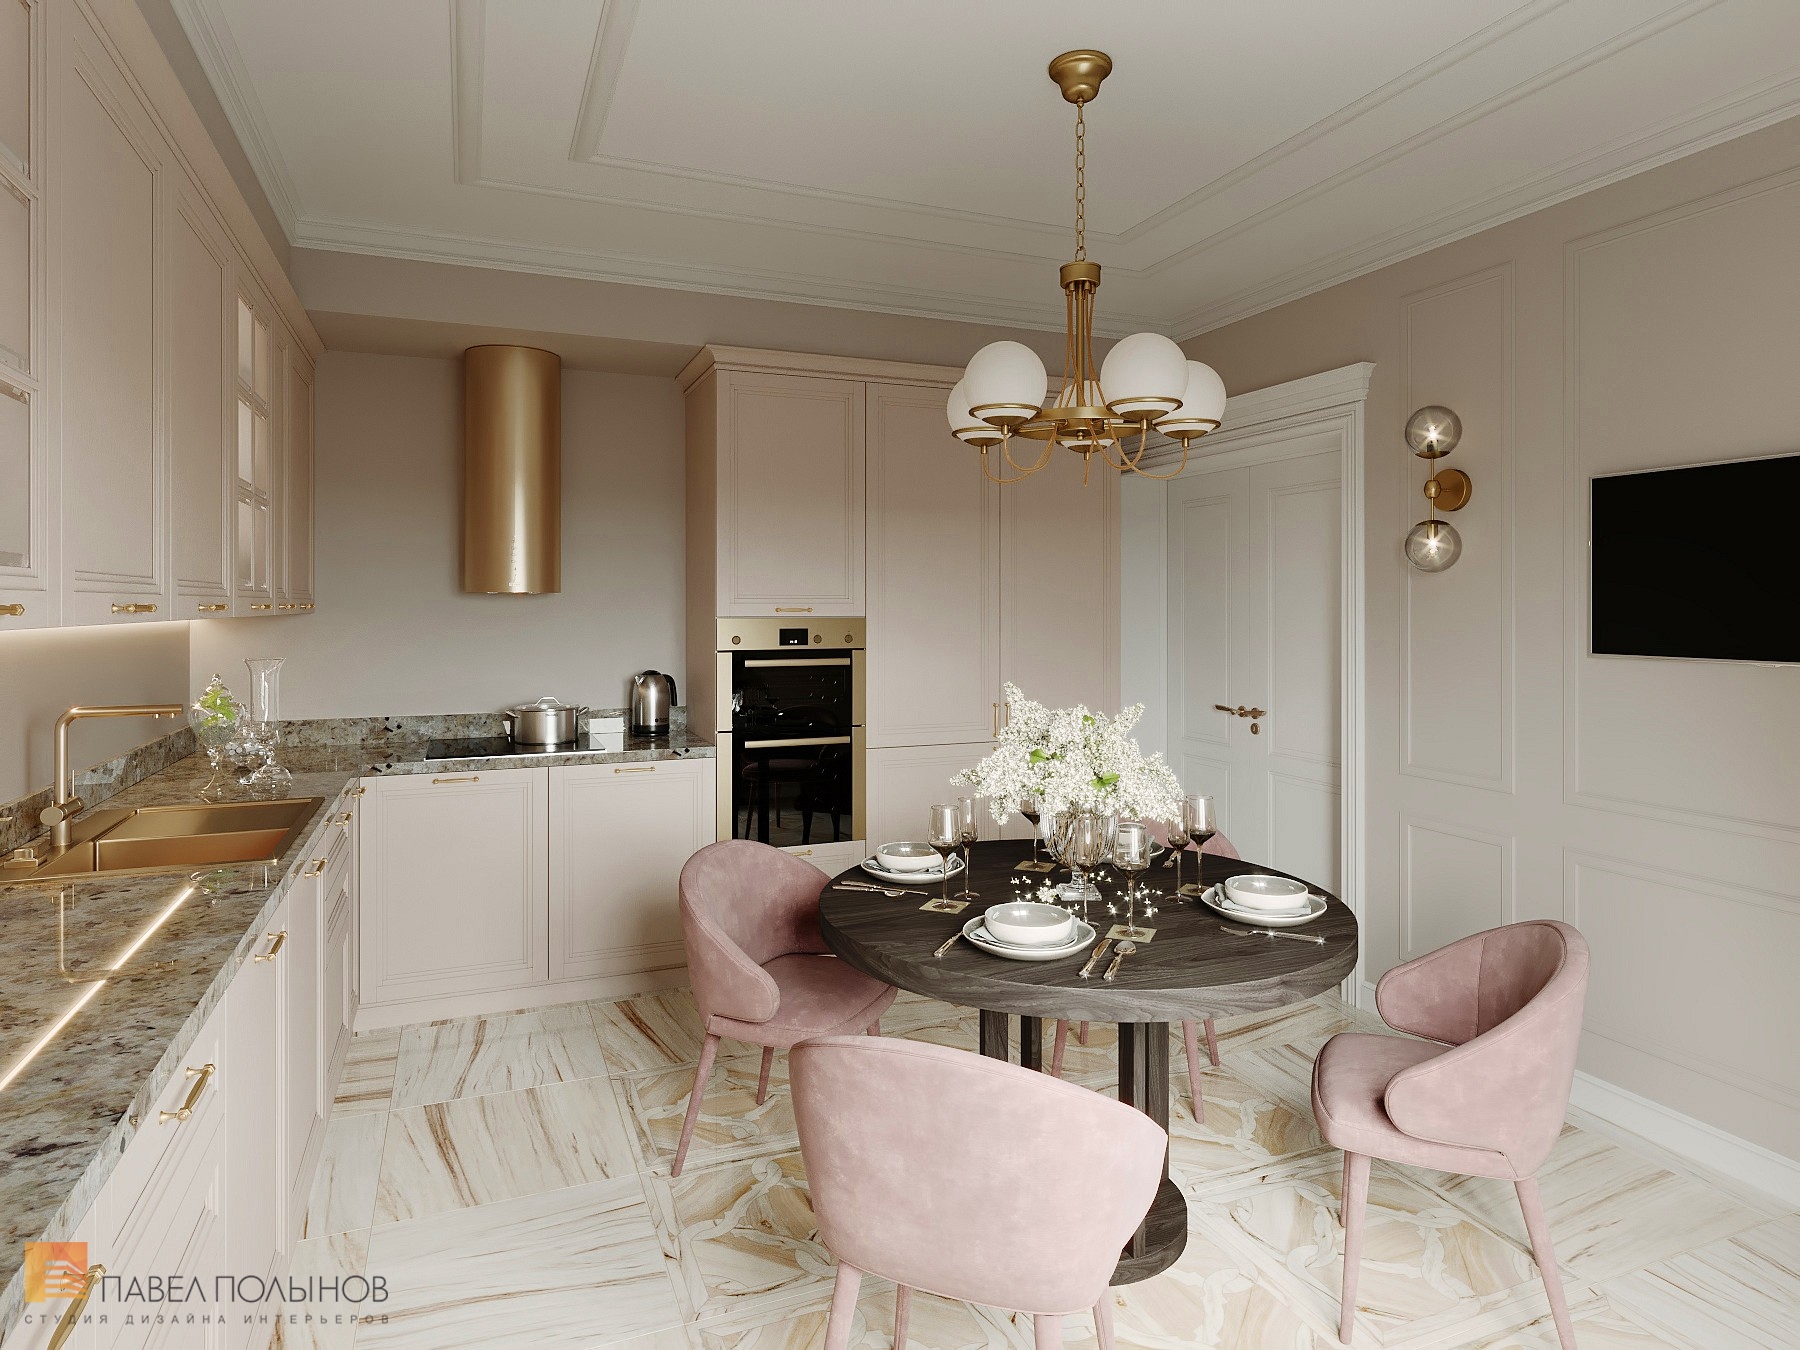 Фото дизайн интерьера кухни из проекта «Интерьер квартиры 140 кв.м. в стиле неоклассики»